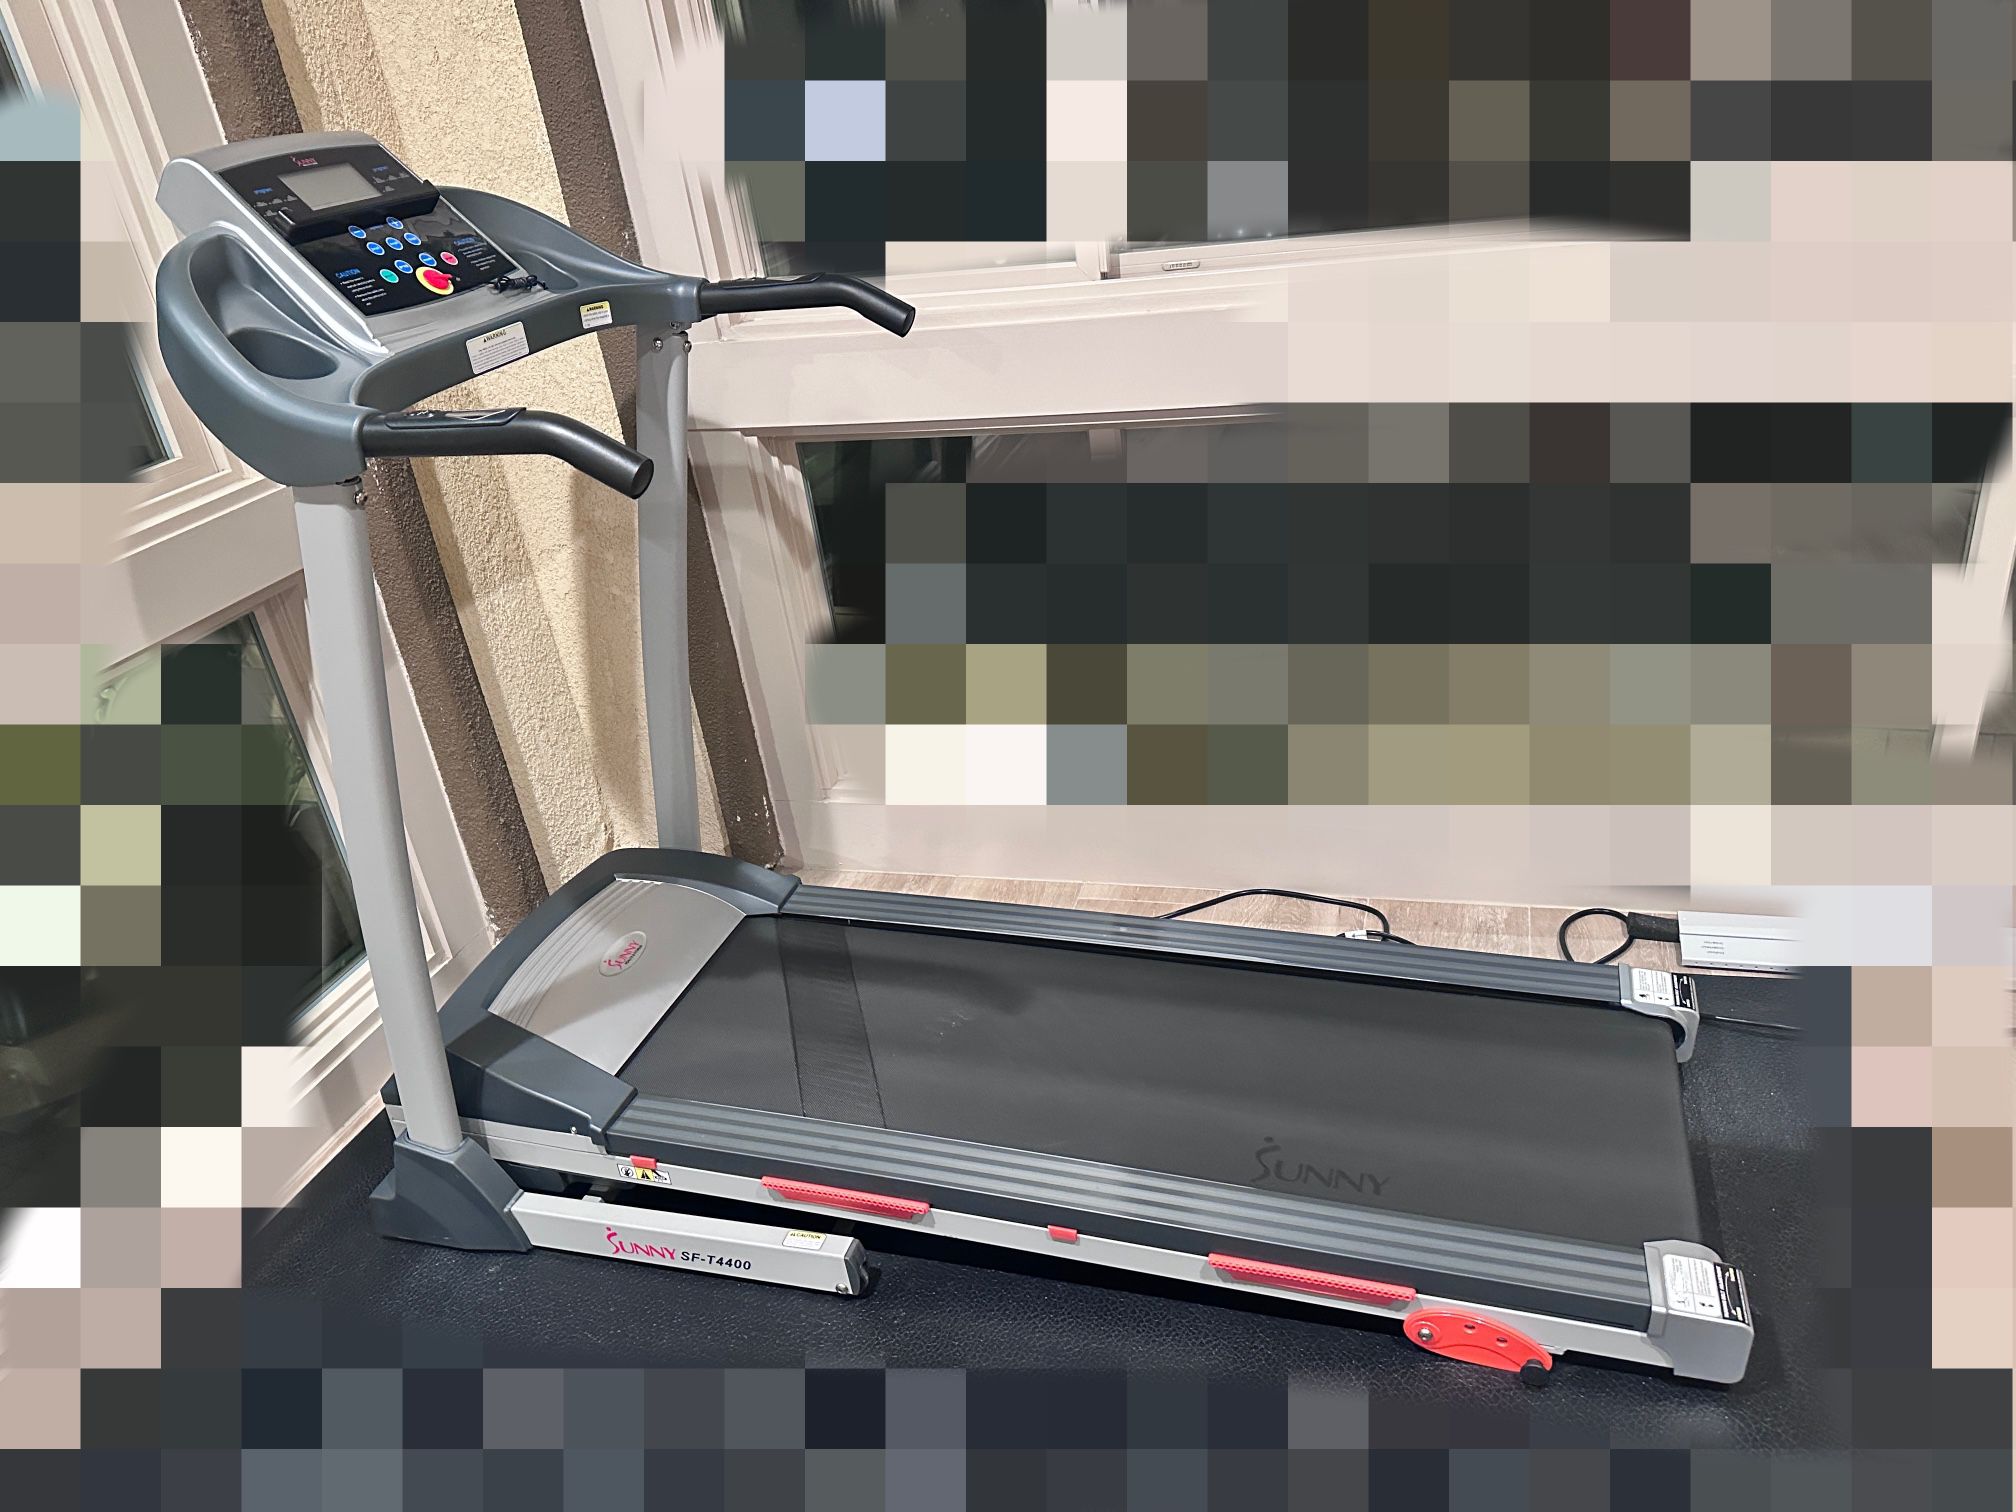 Treadmill for sale